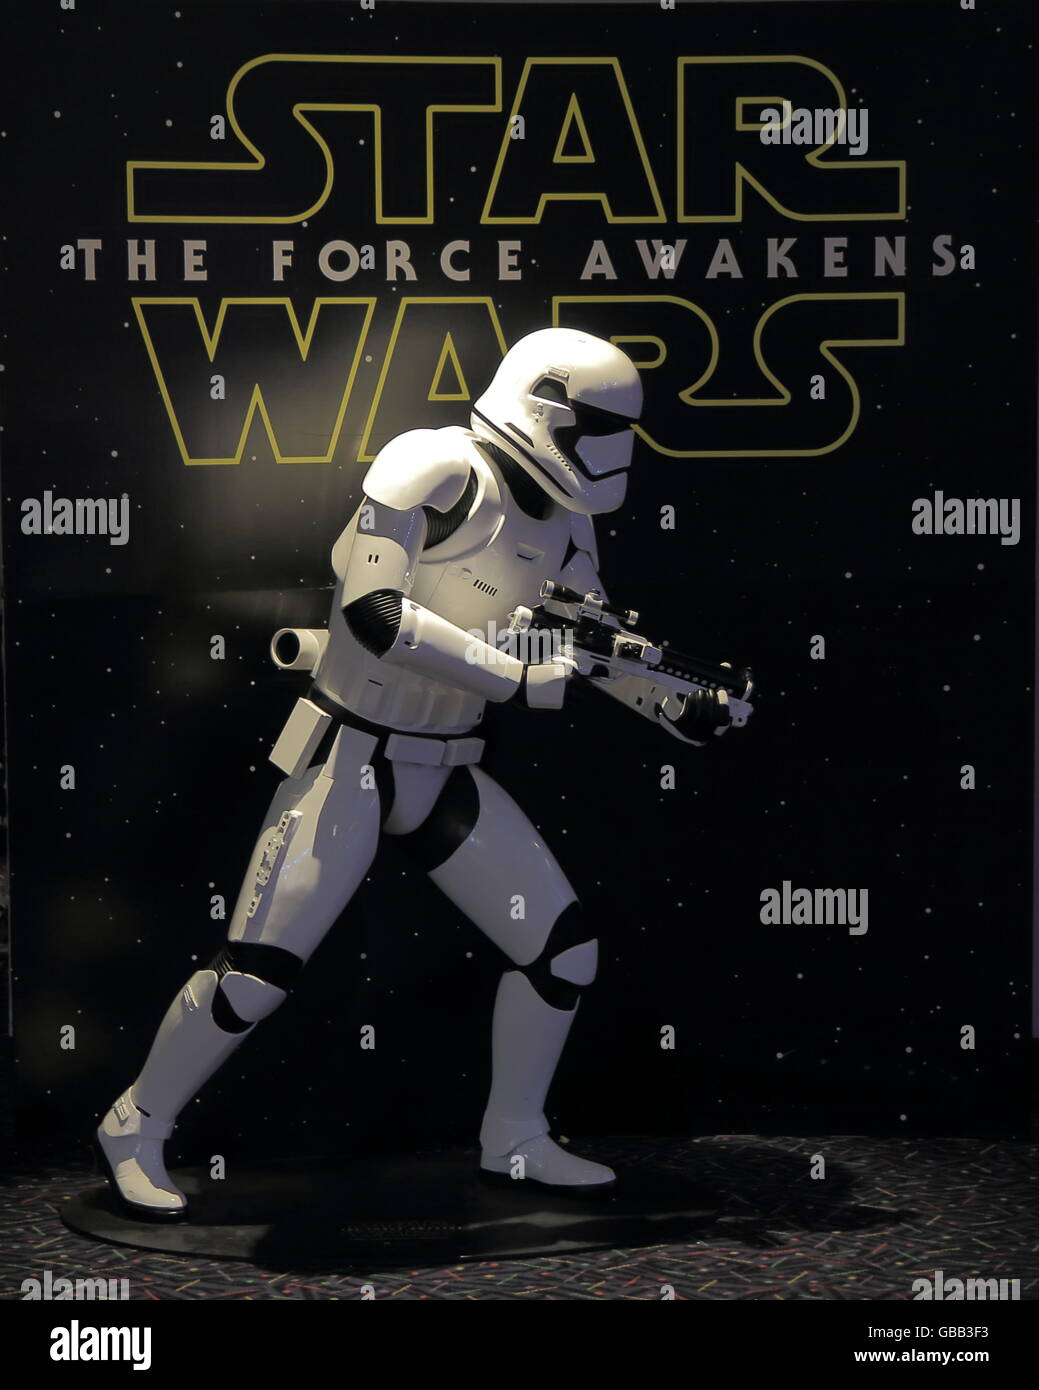 Star Wars il display al cinema Hoyts cinema. Foto Stock